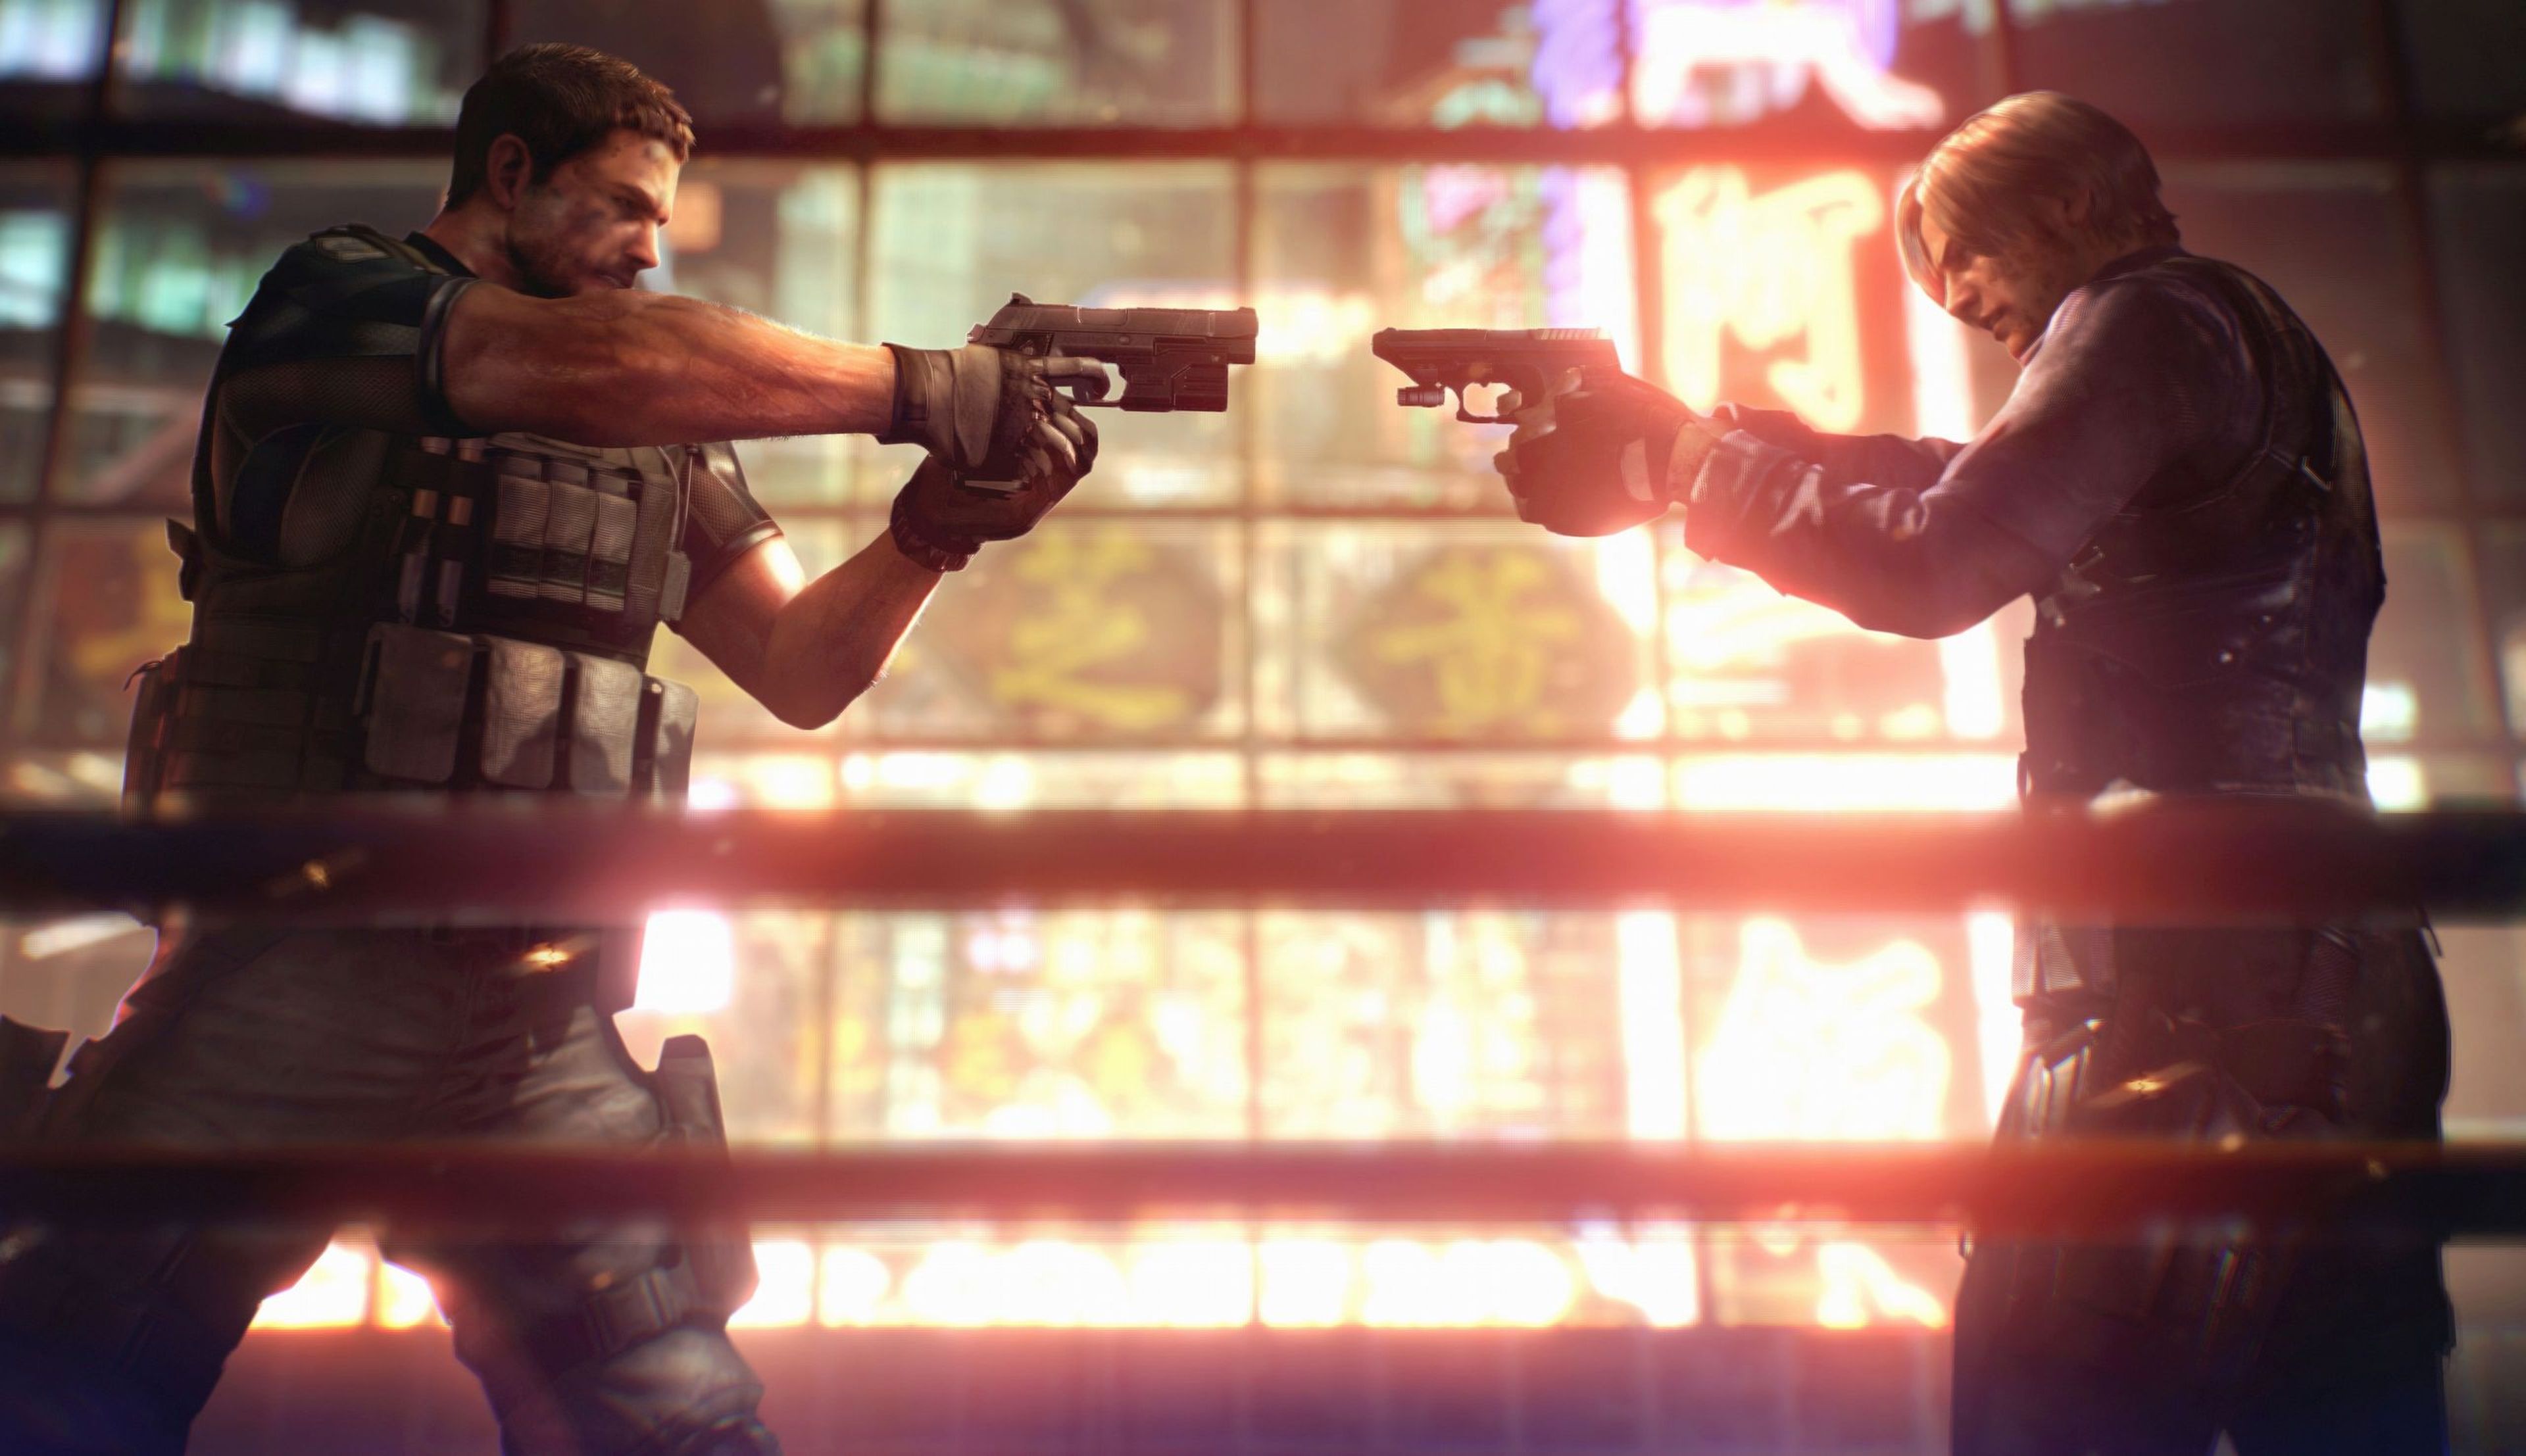 Resident Evil 6 listado para PS4 y Xbox One